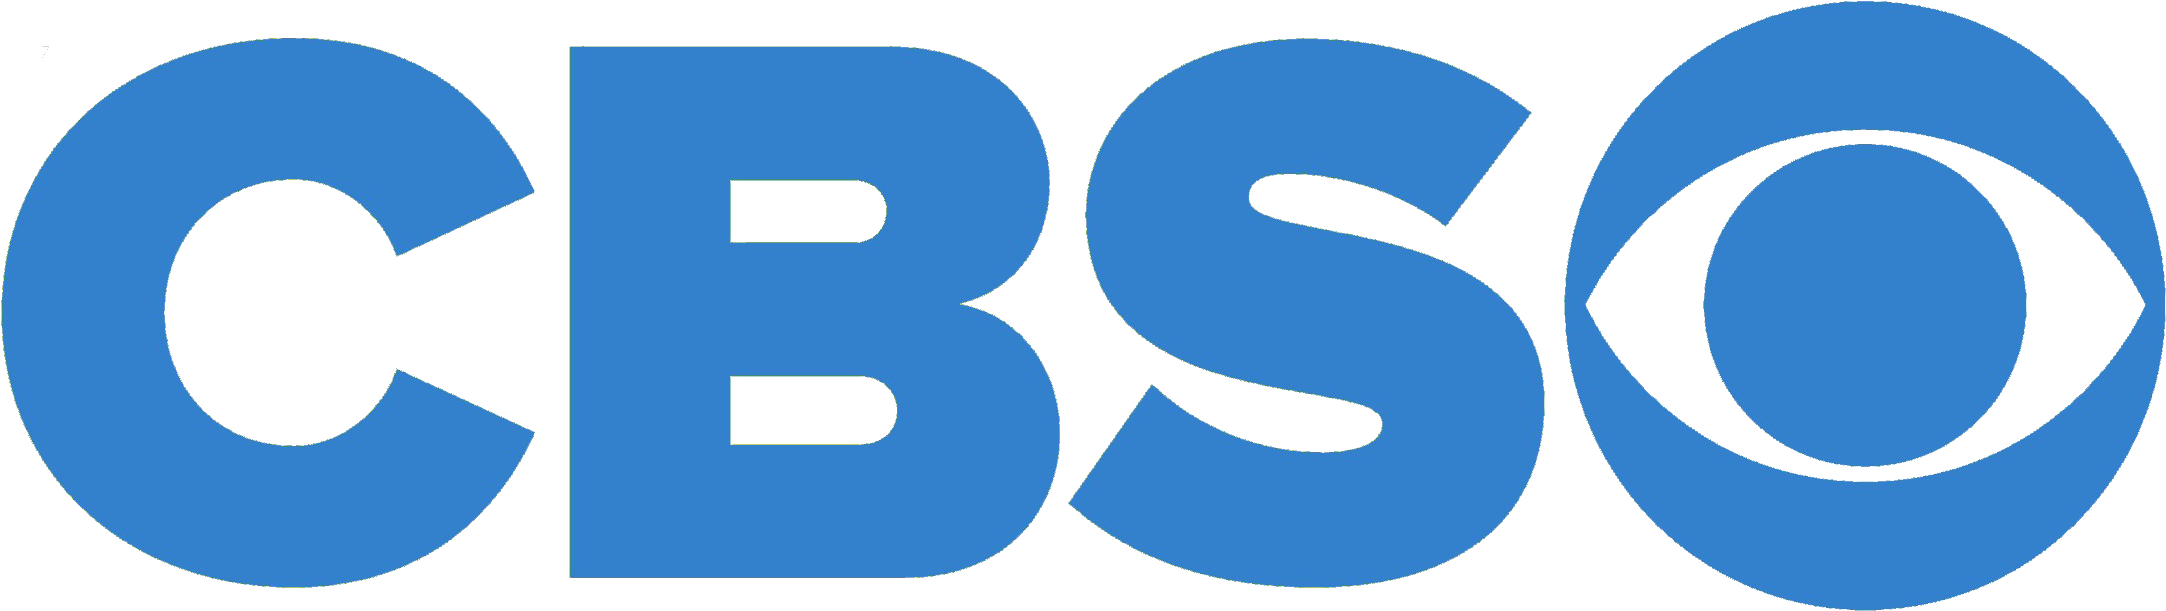 C B S Network Logo Blue PNG